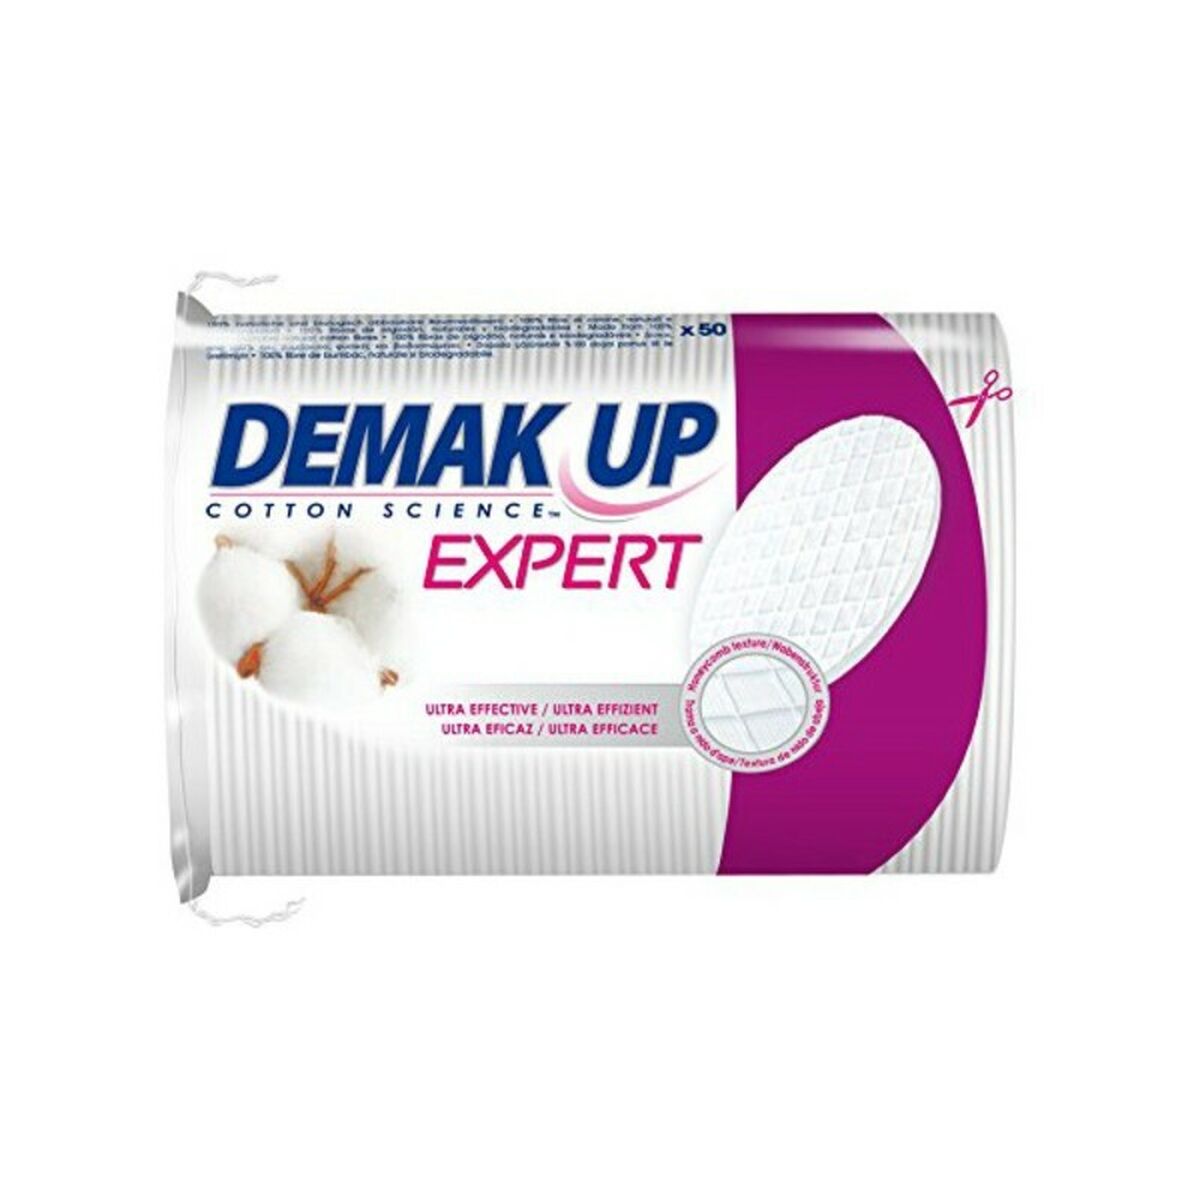 Make-up Remover Pads Demak Up Up Expert (50 Units)-0